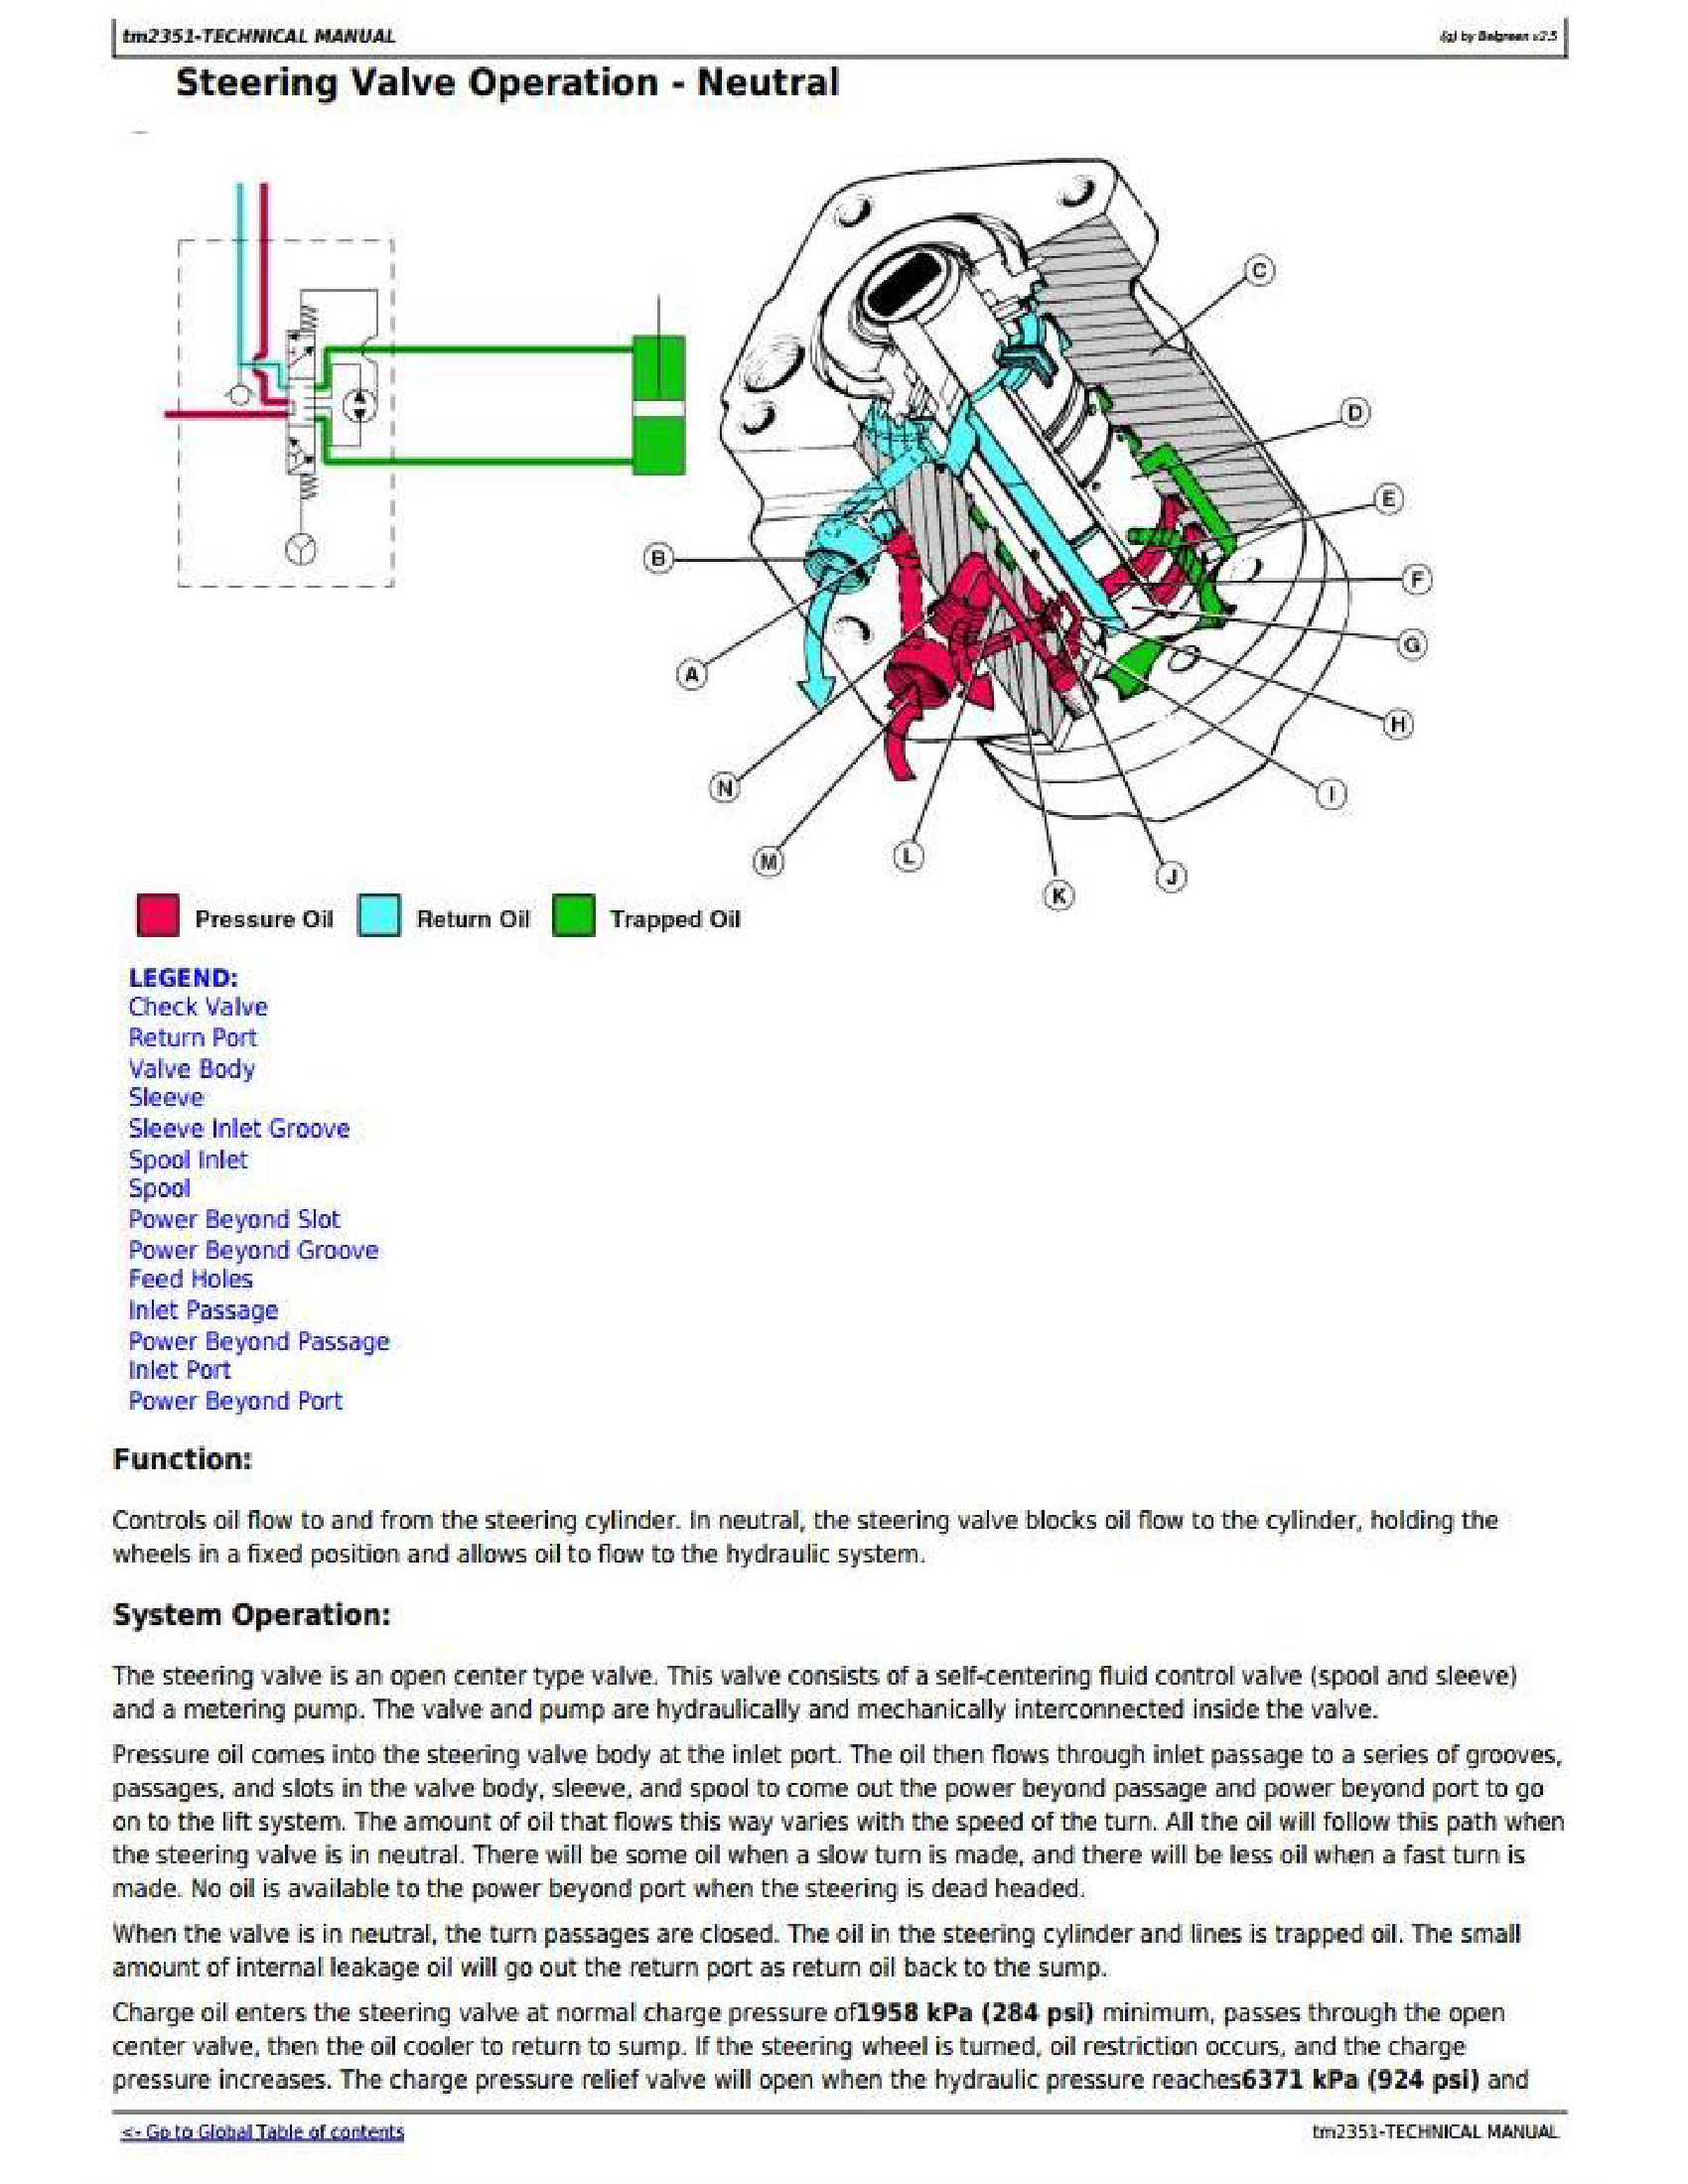 John Deere X748 manual pdf